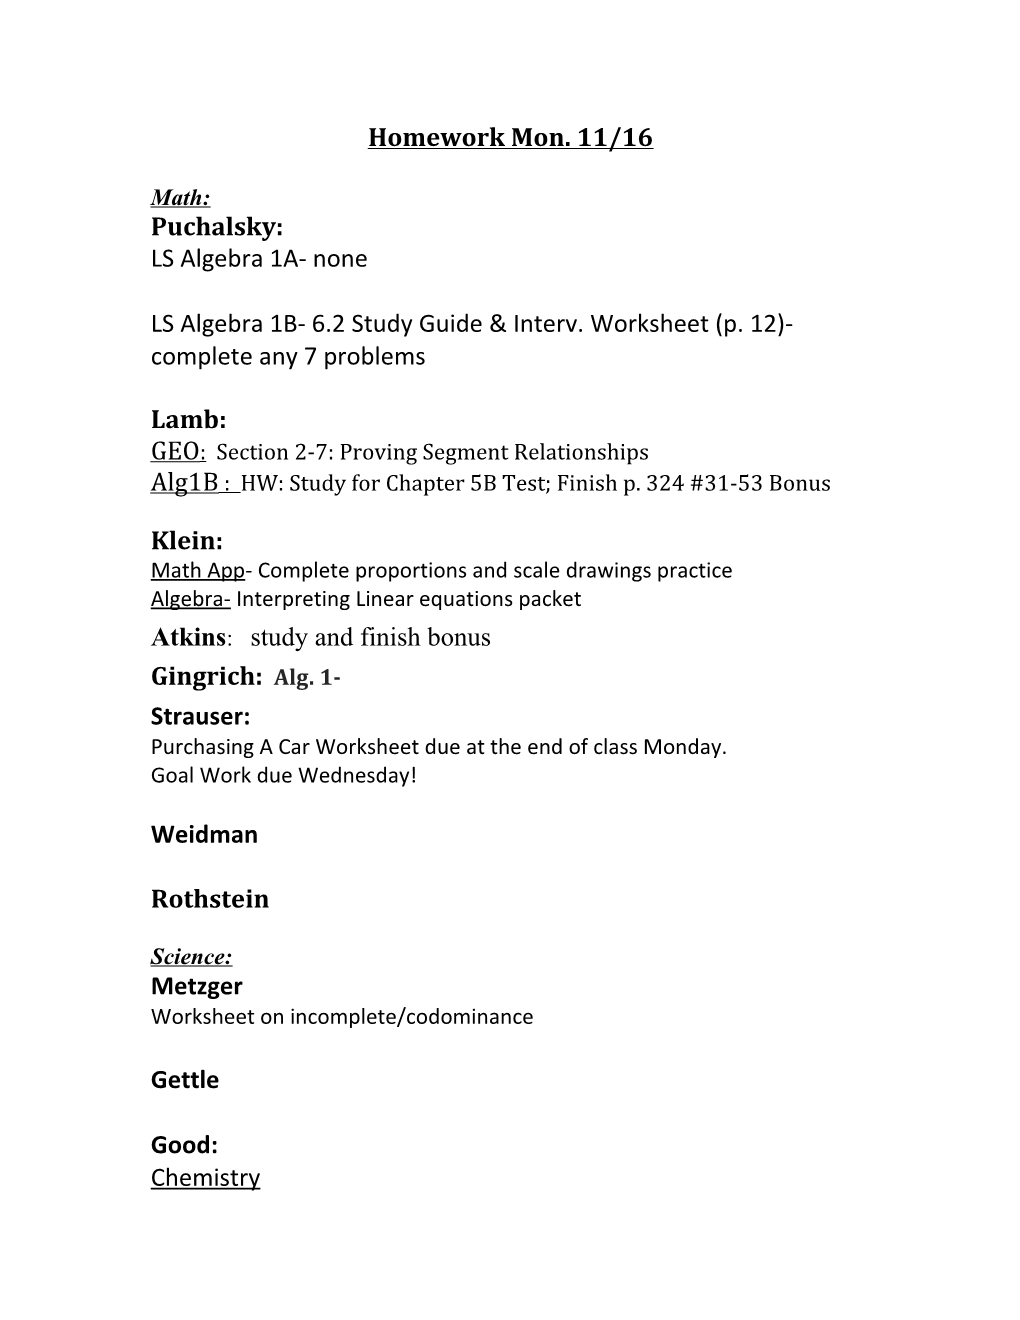 LS Algebra 1B- 6.2 Study Guide & Interv. Worksheet (P. 12)- Complete Any 7 Problems